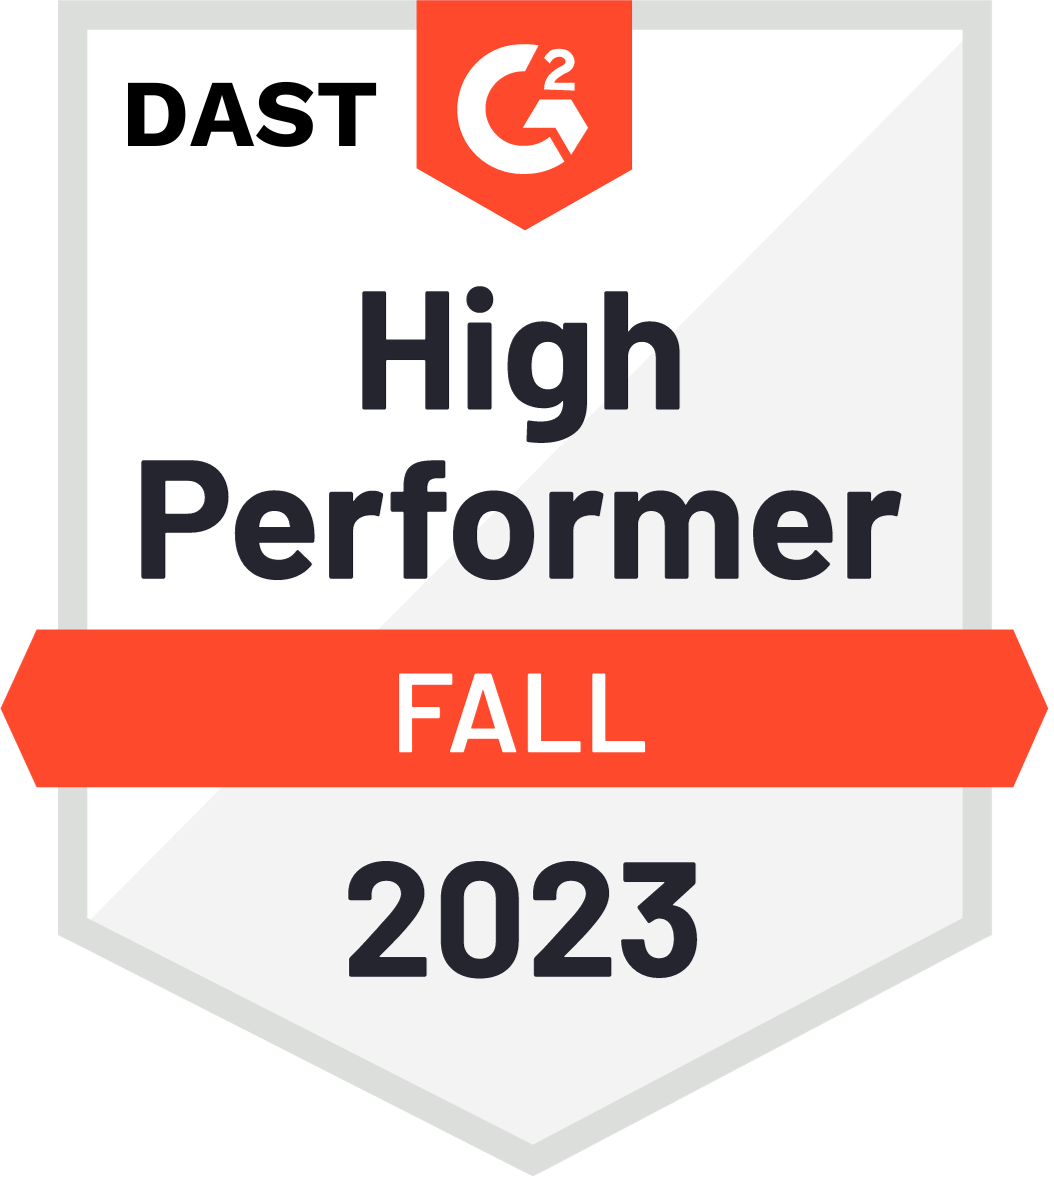 G2 DAST fall high performer